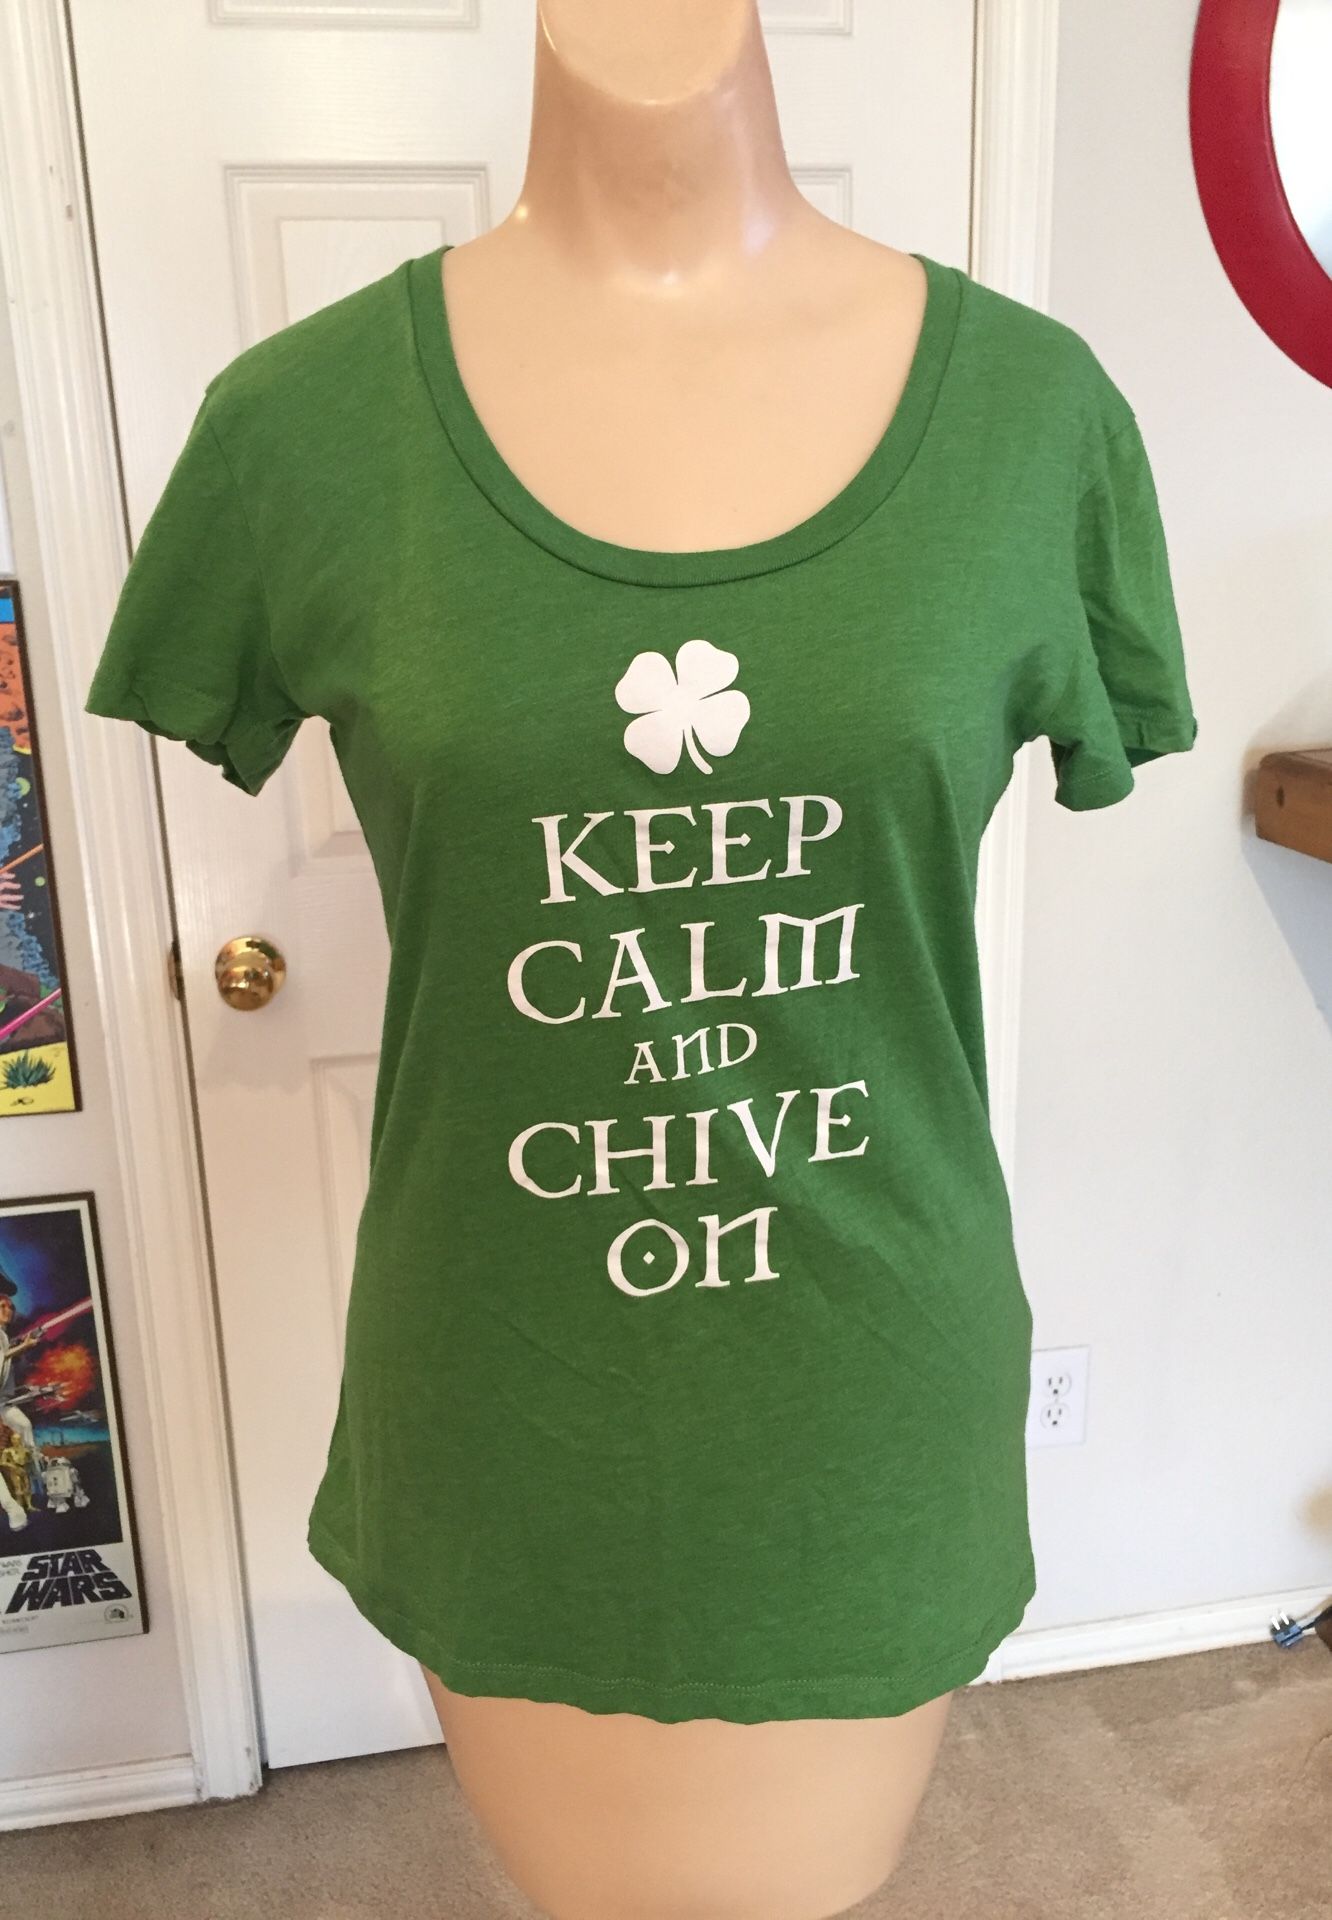 CHIVE / KCCO Shirts